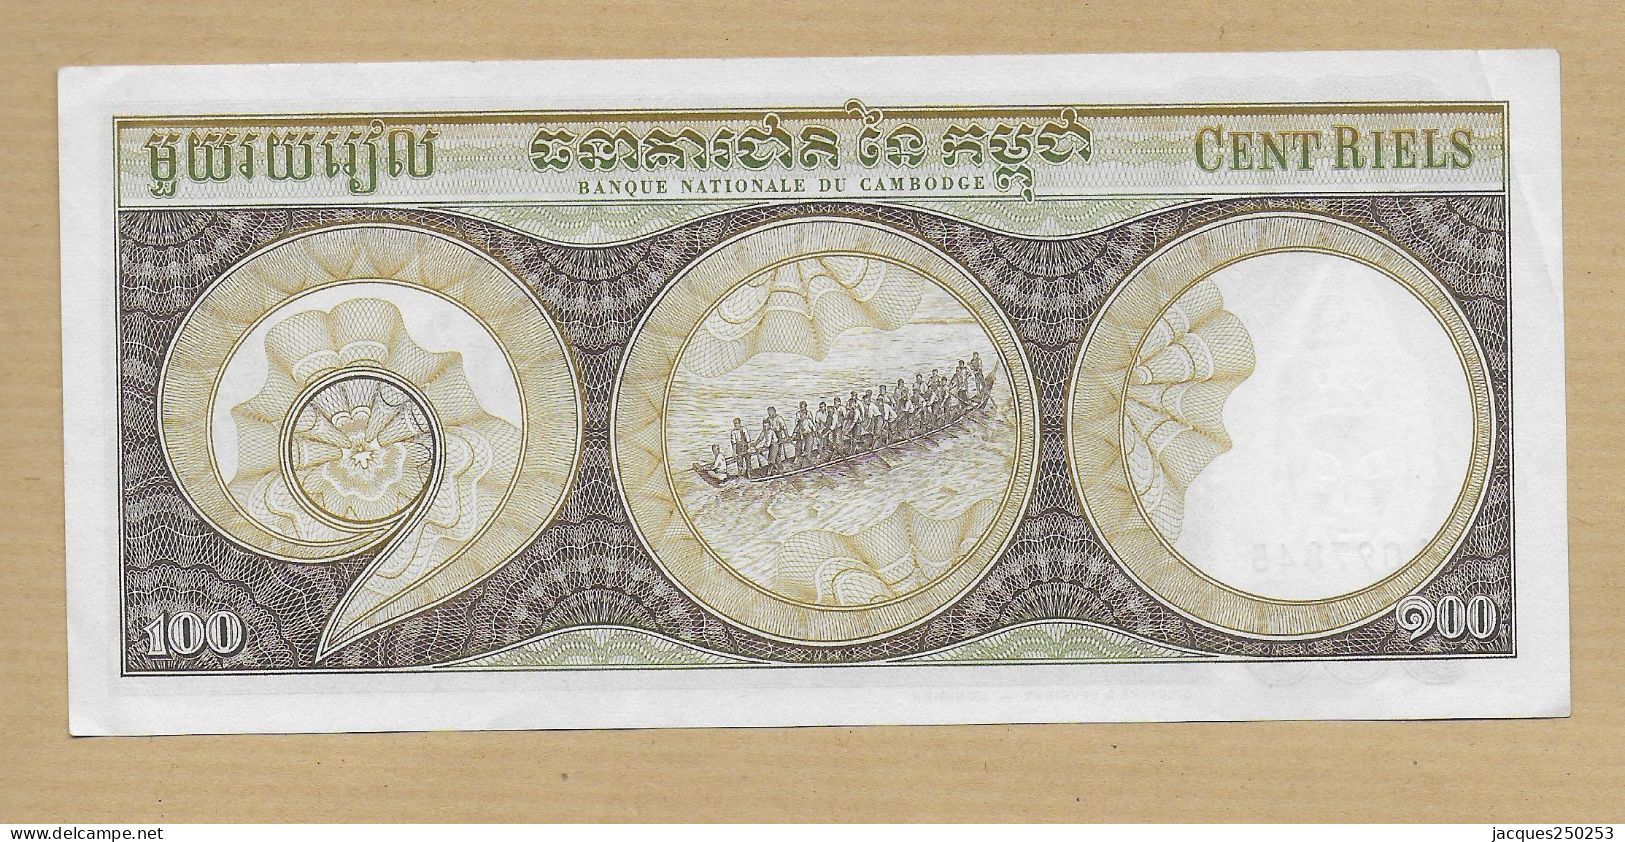 100 RIELS 1972 CAMBODGE NEUF - Cambodge